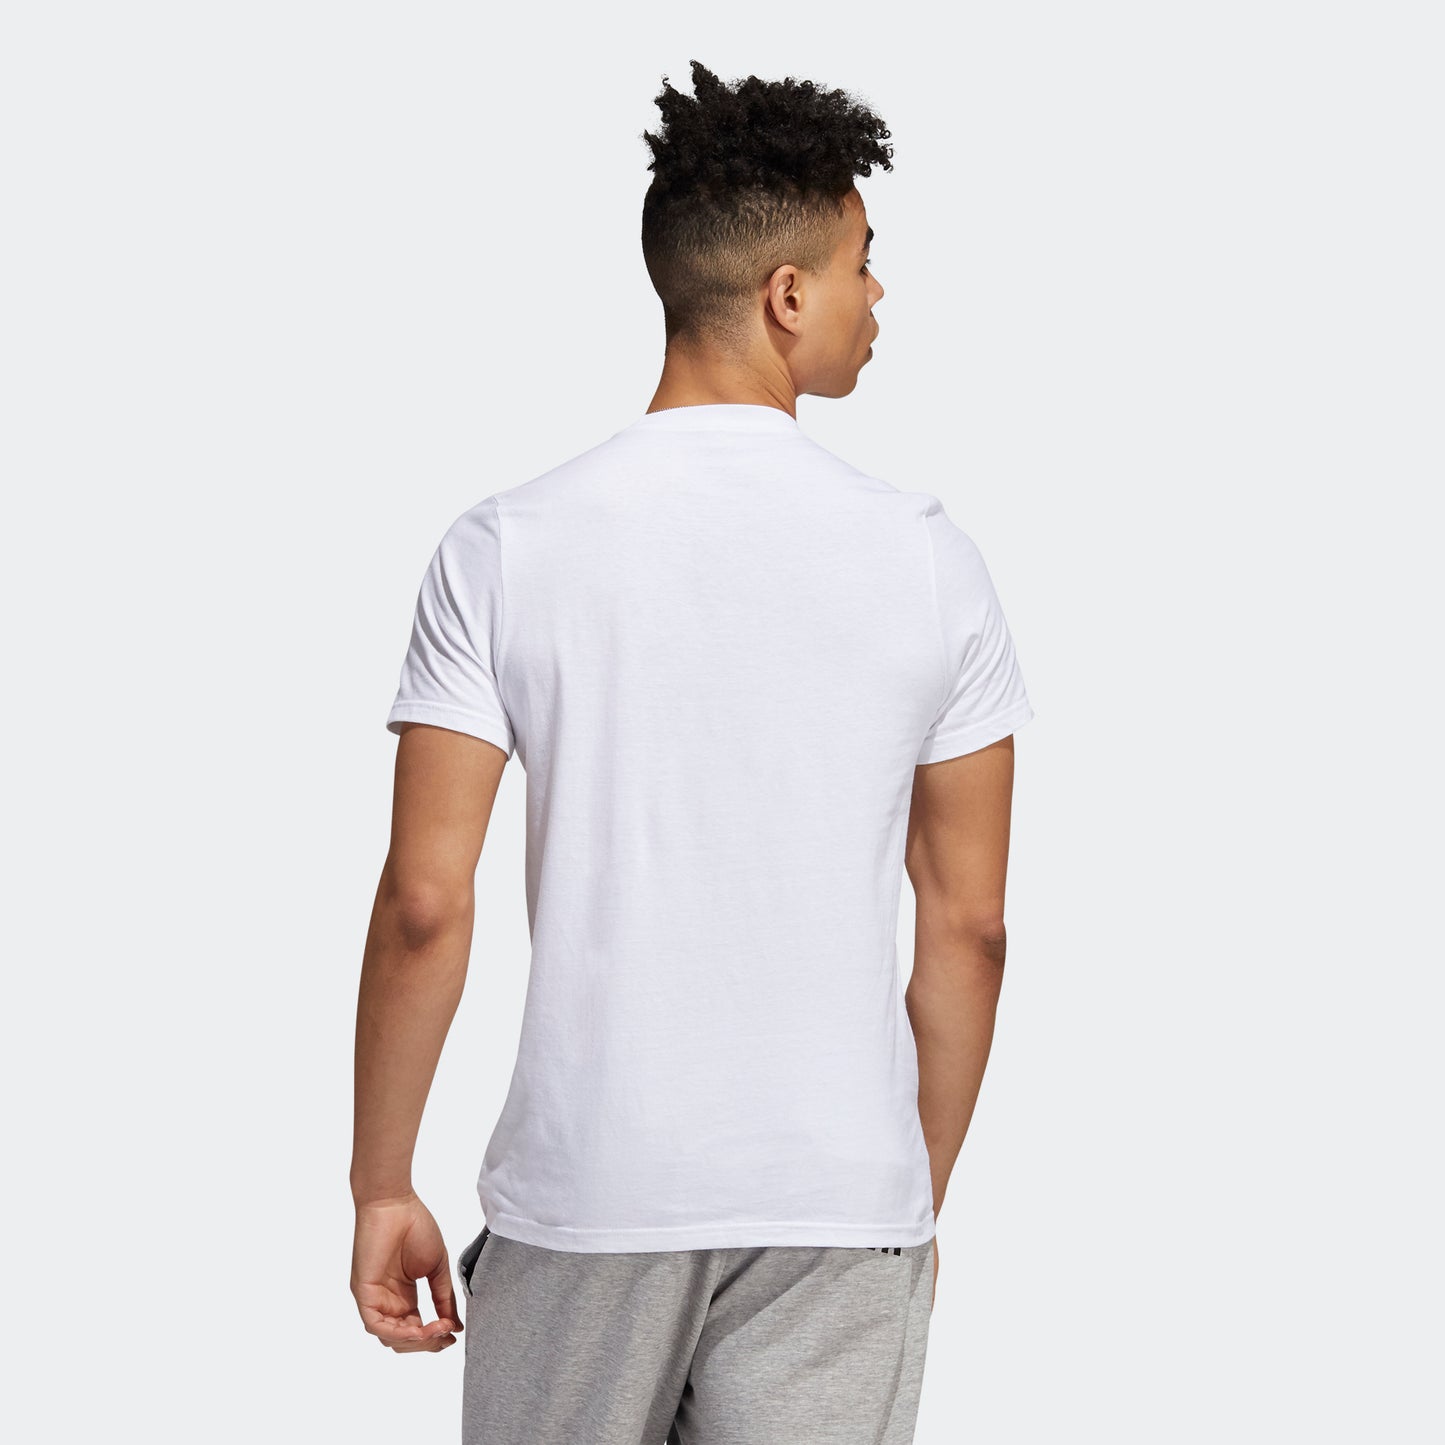 adidas AMPLIFIER T-Shirt | White | Men's